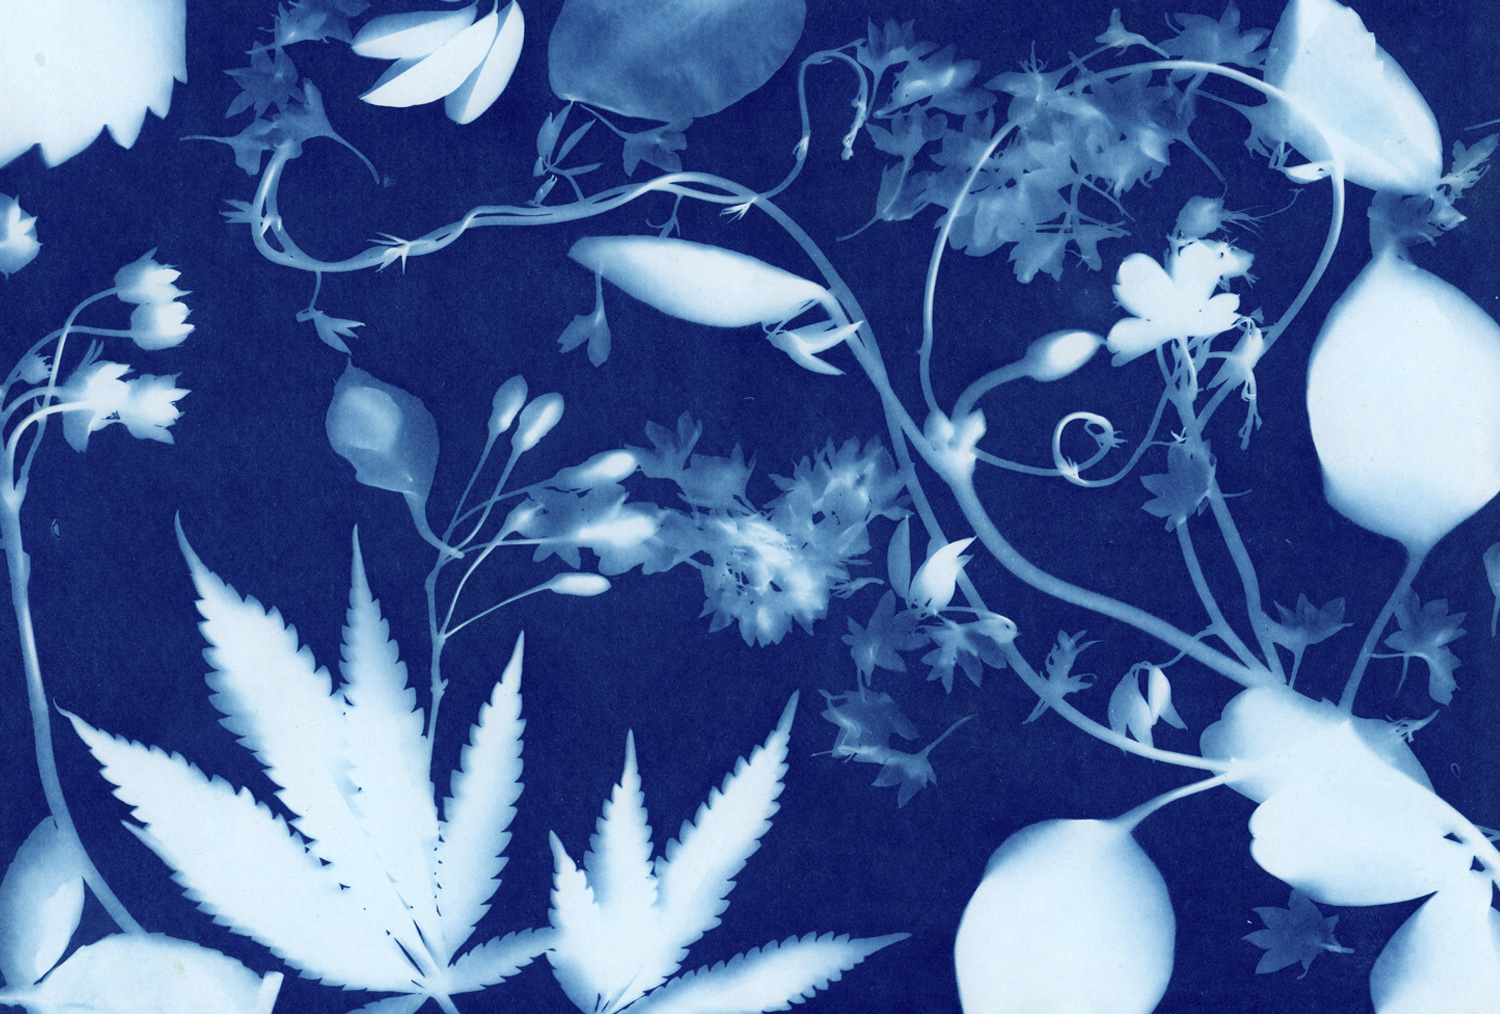 Blue Dream by Anja Charbonneau and Fieldwork Flowers